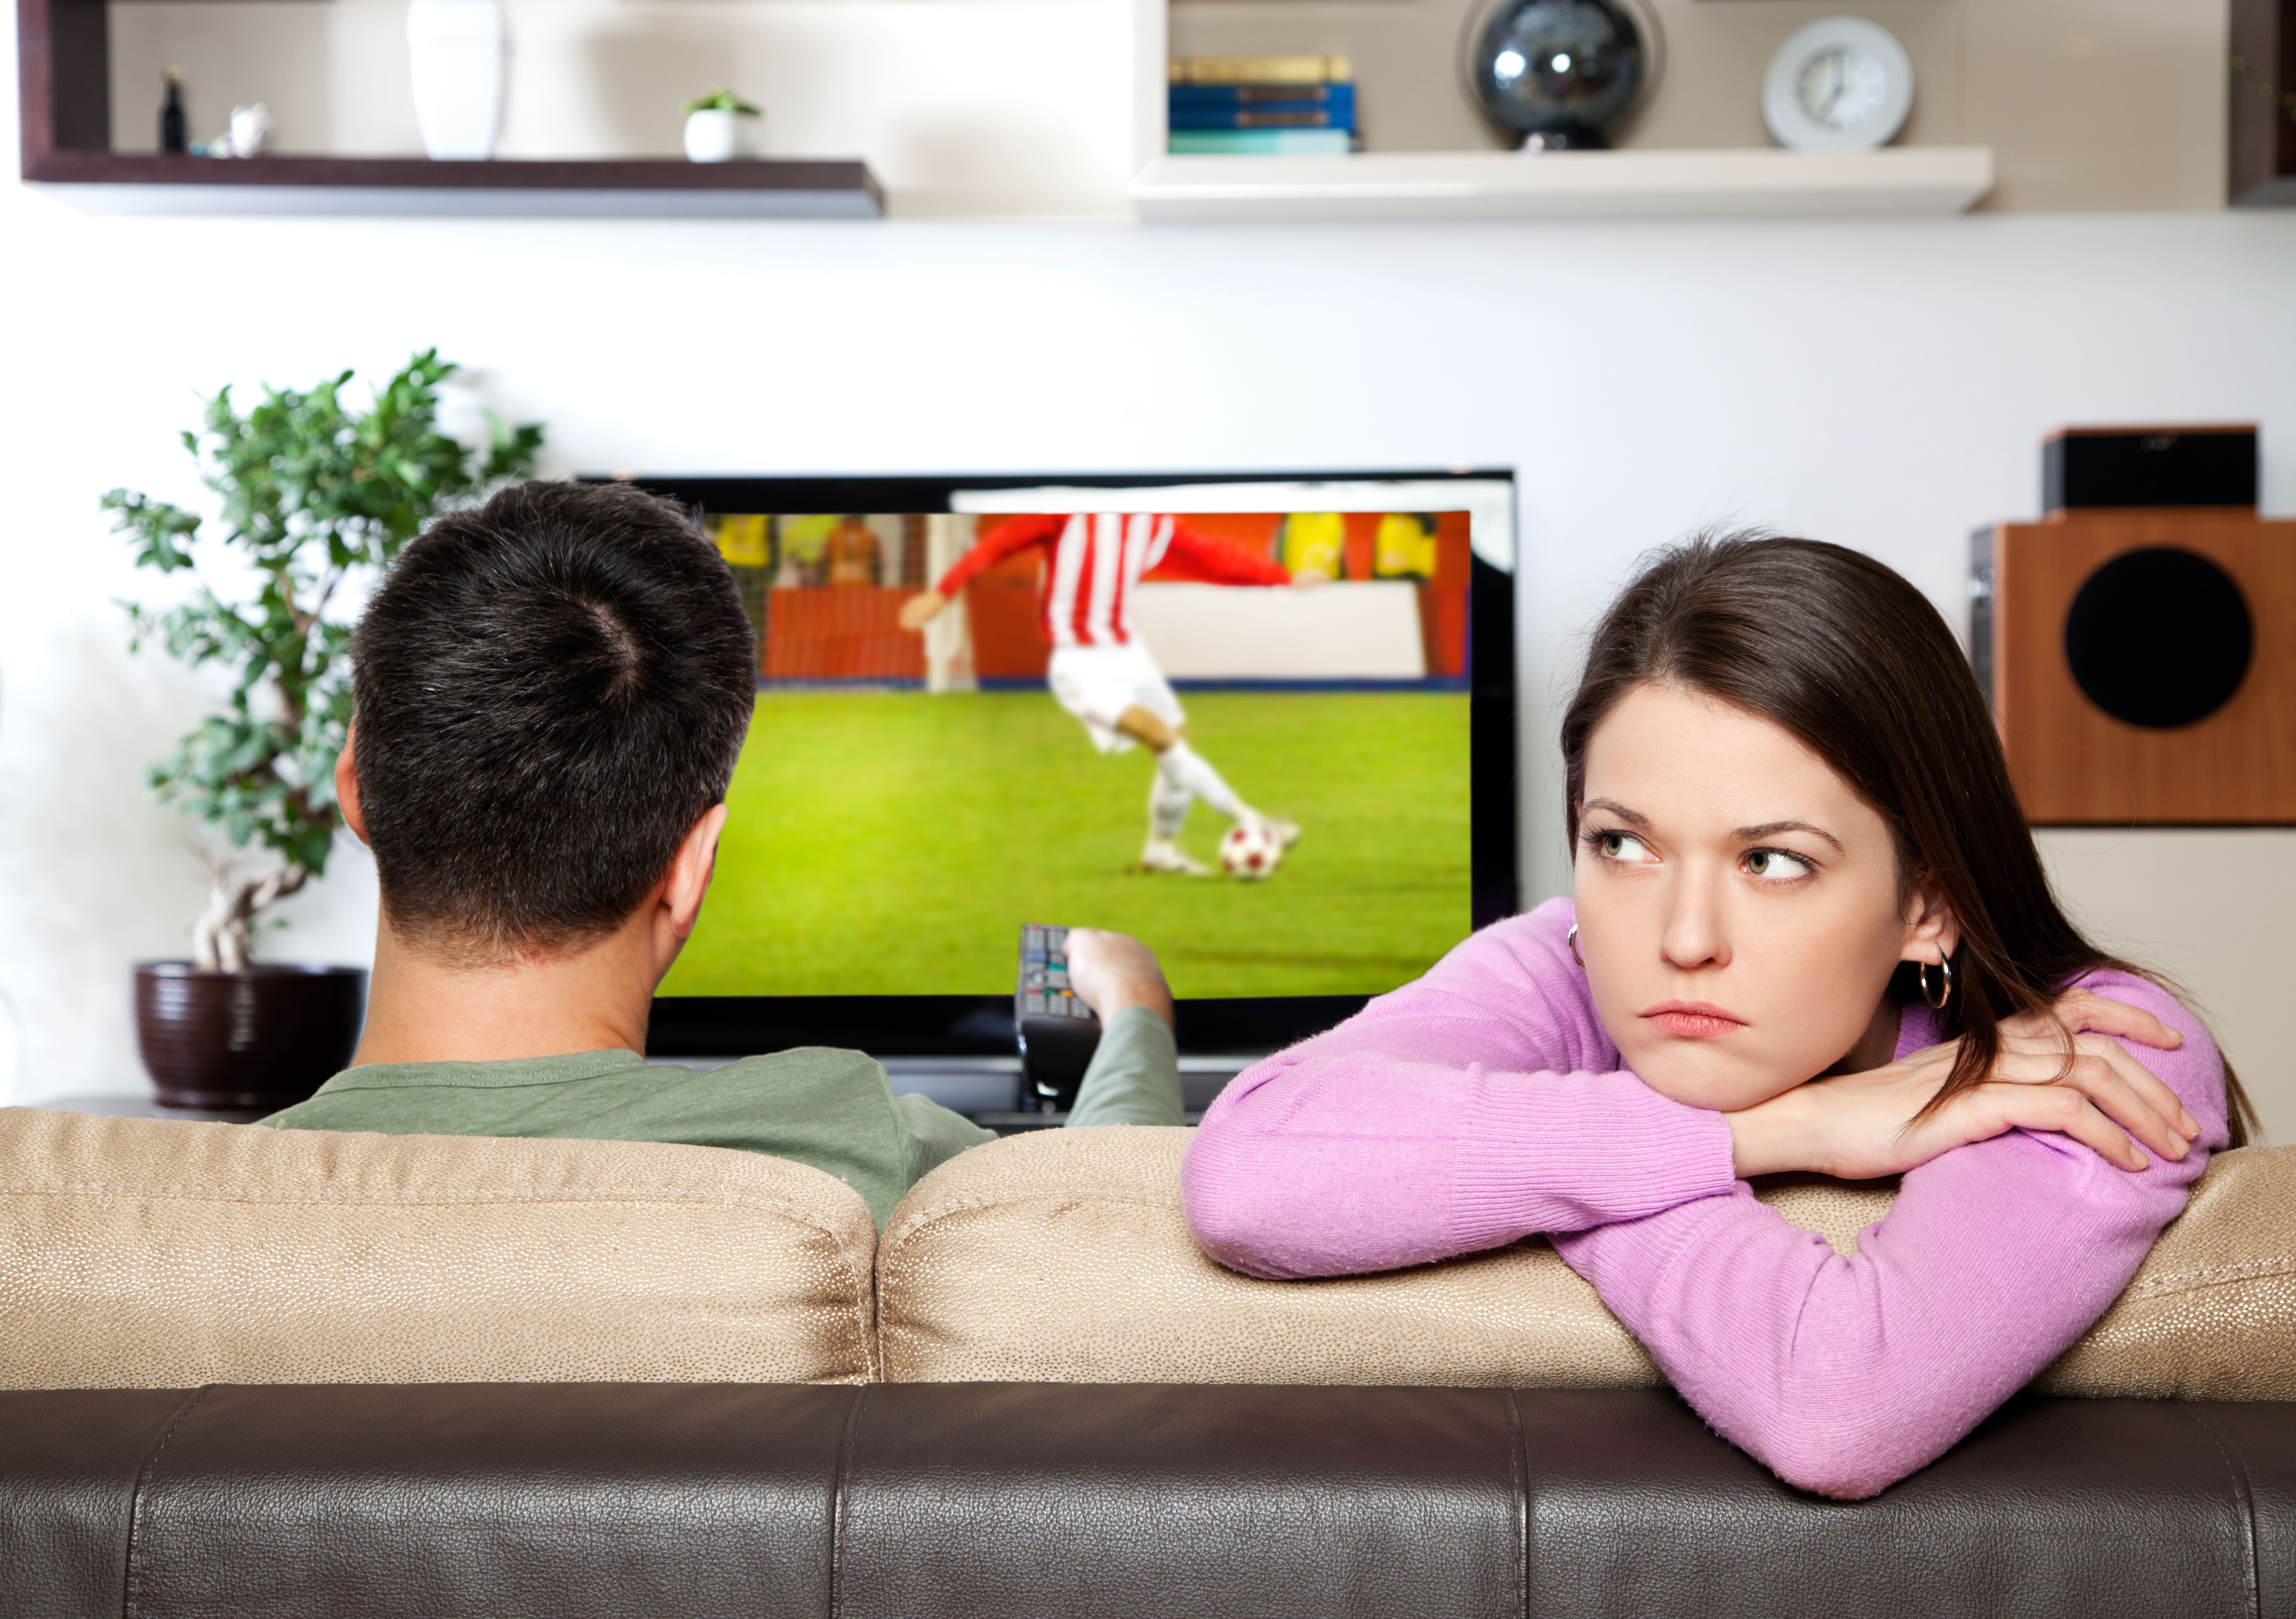 Муж смотрит видео бывшей. Мужчина у телевизора. Мужчина и женщина на диване. Муж с женой у телевизора. Женщина у телевизора.